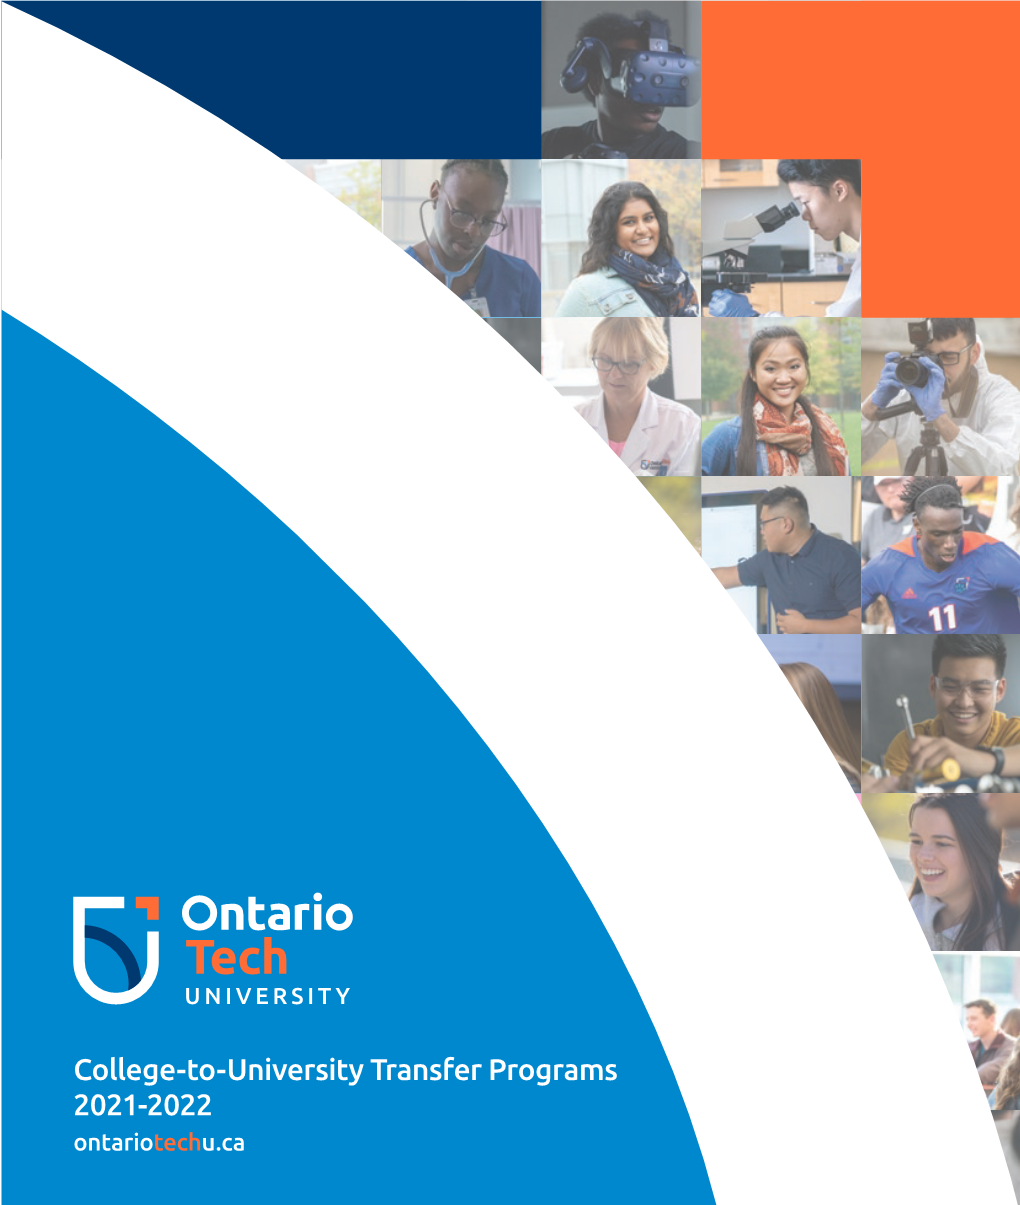 College-To-University Transfer Programs 2021-2022 Ontariotechu.Ca Ontariotechu.Ca 1 Say Hello to Ontario Tech University